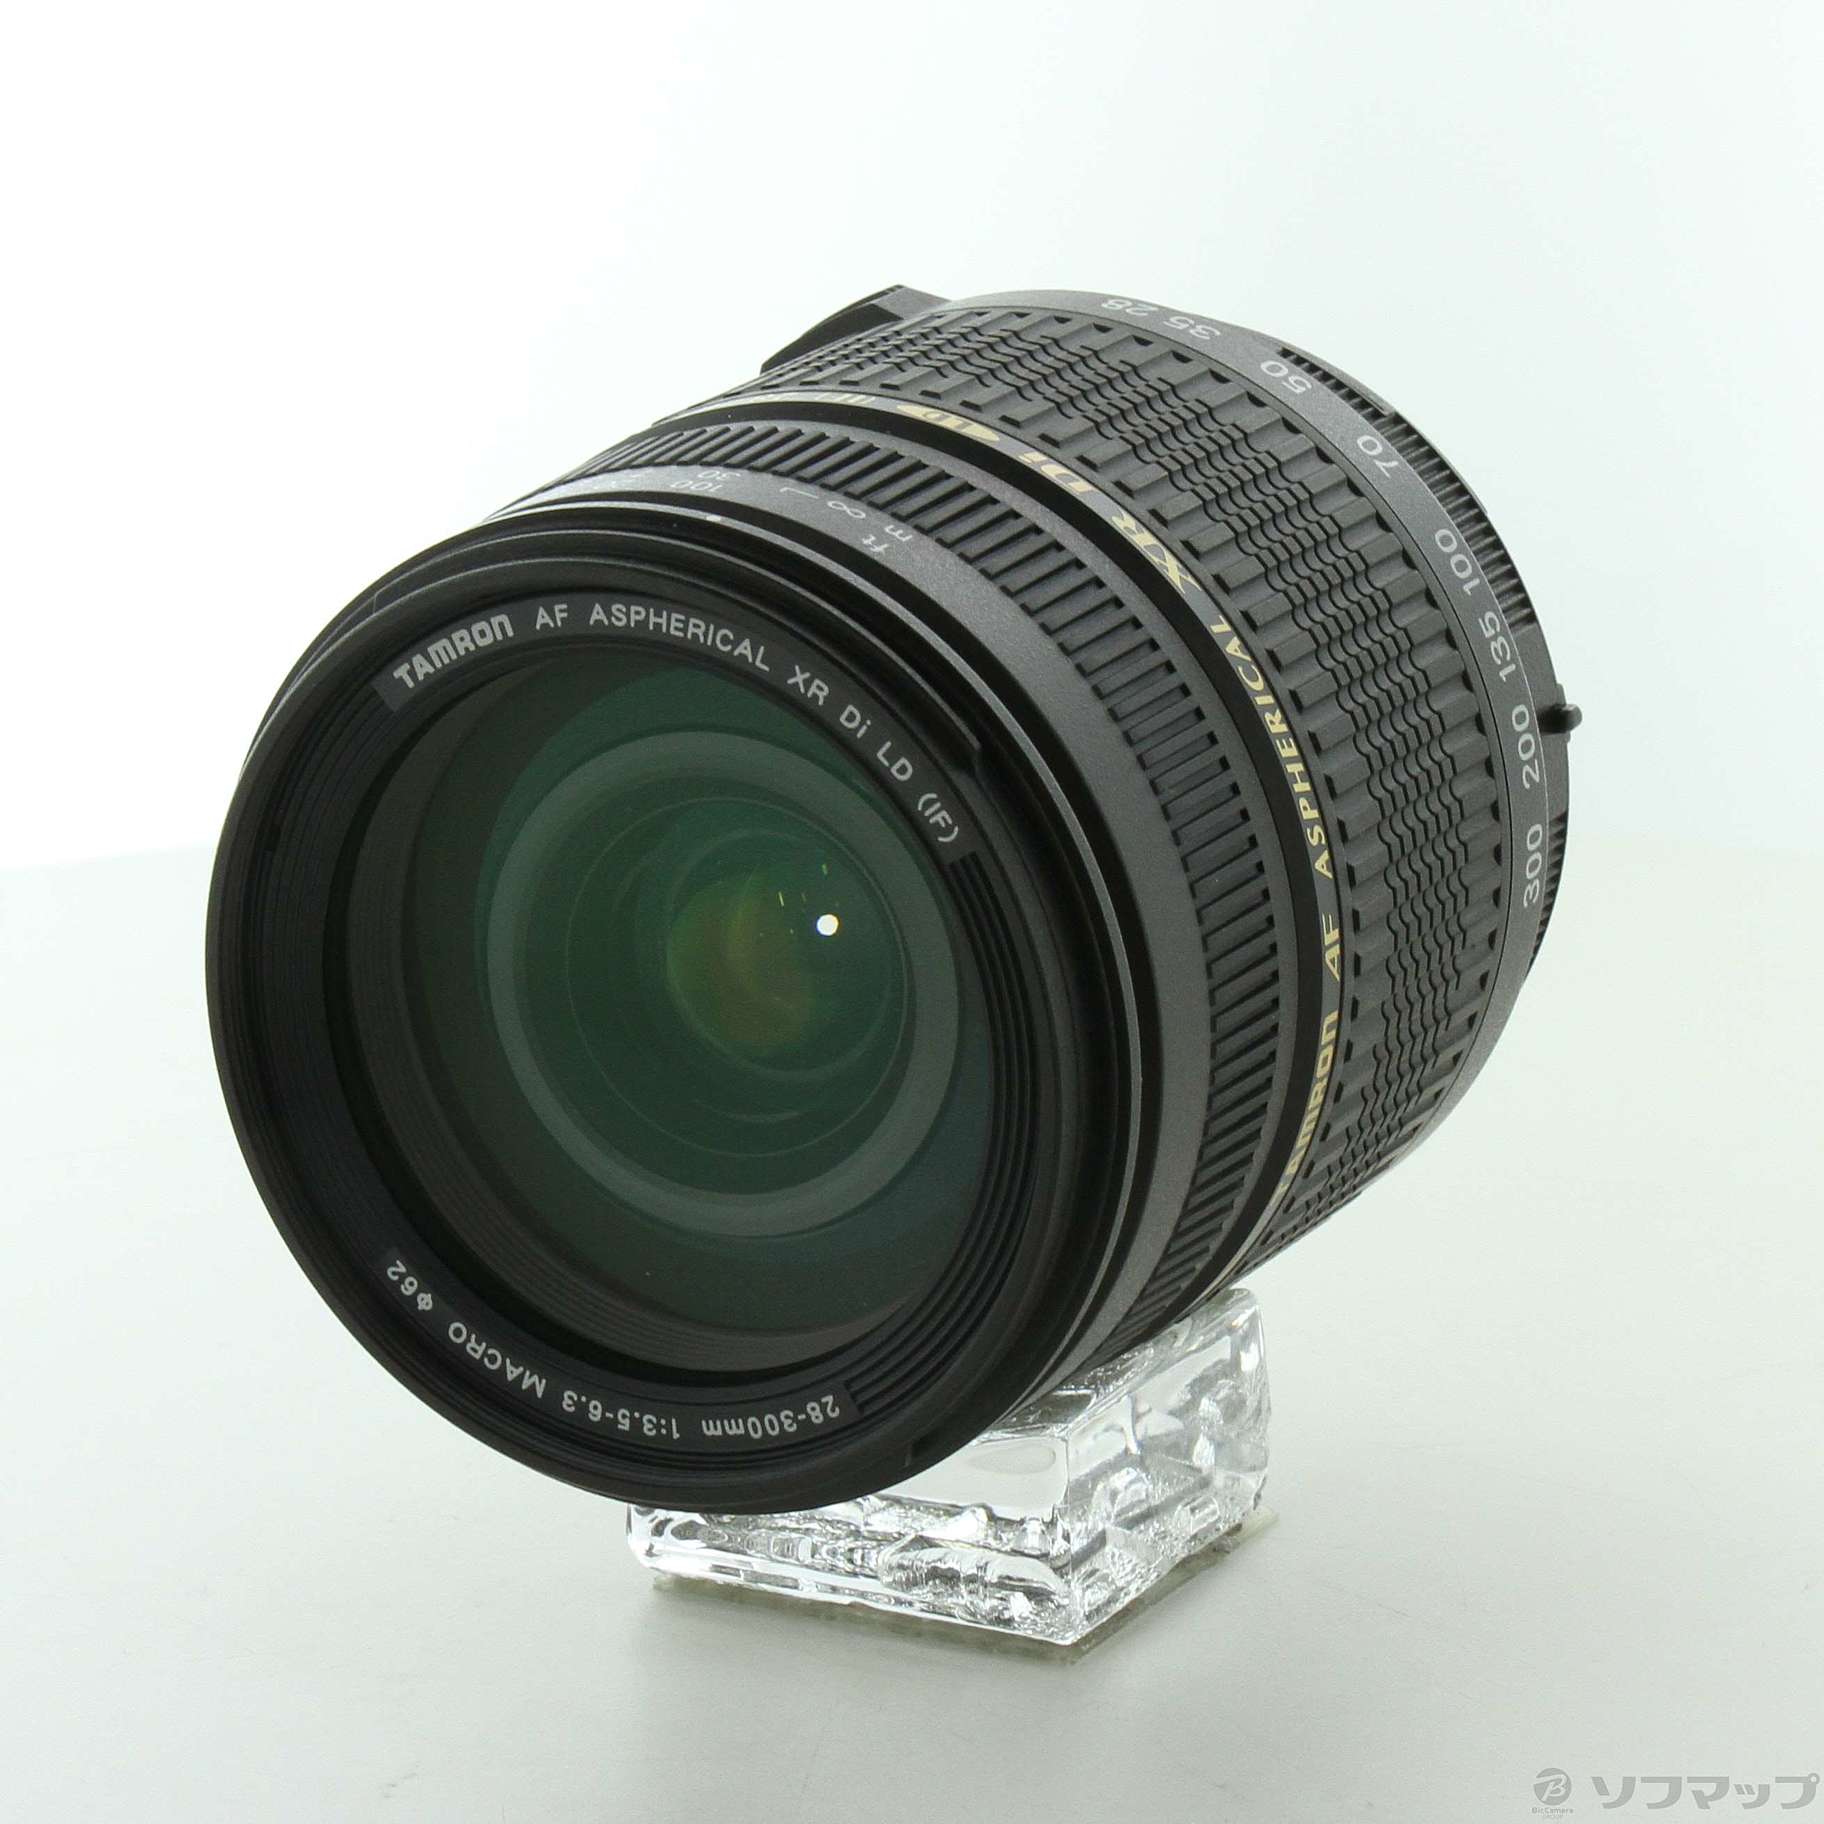 中古】TAMRON AF 28-300mm F3.5-6.3 XR Di A061N (Nikon用